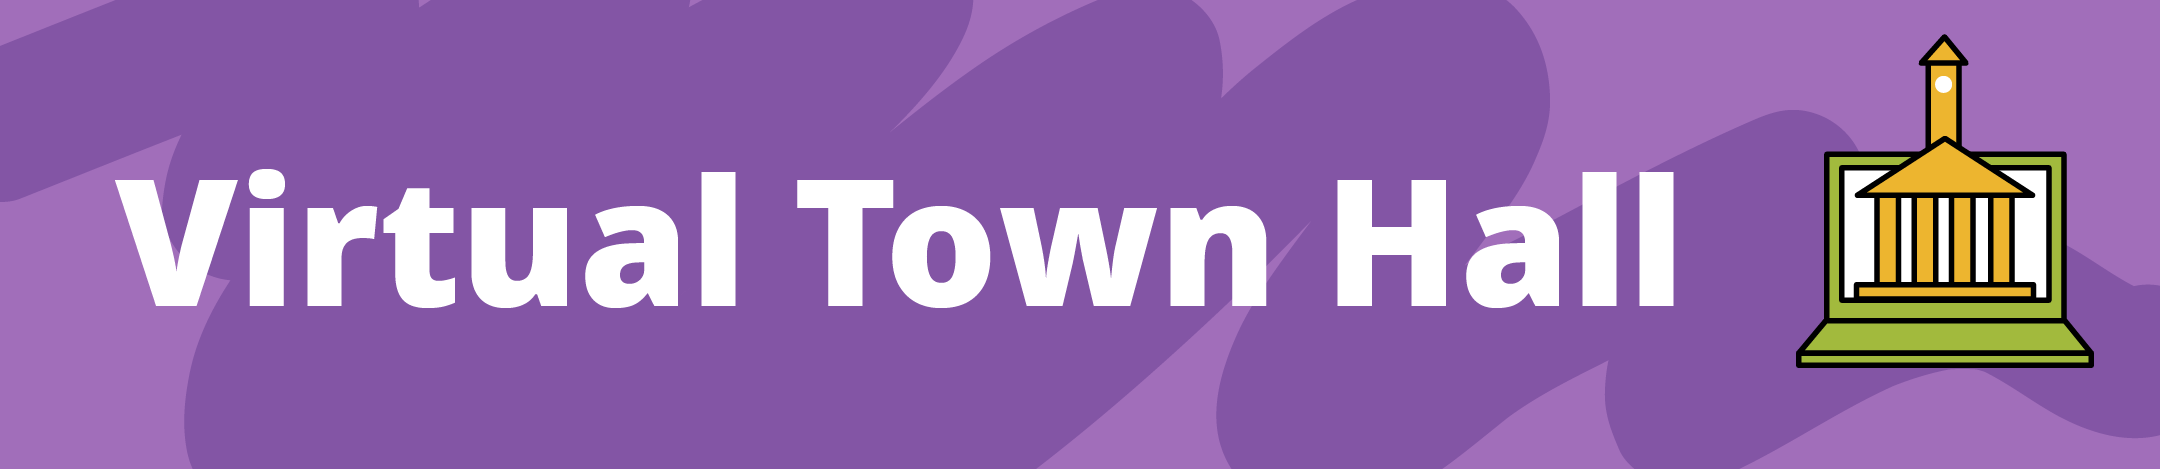 Virtual Town Hall Banner